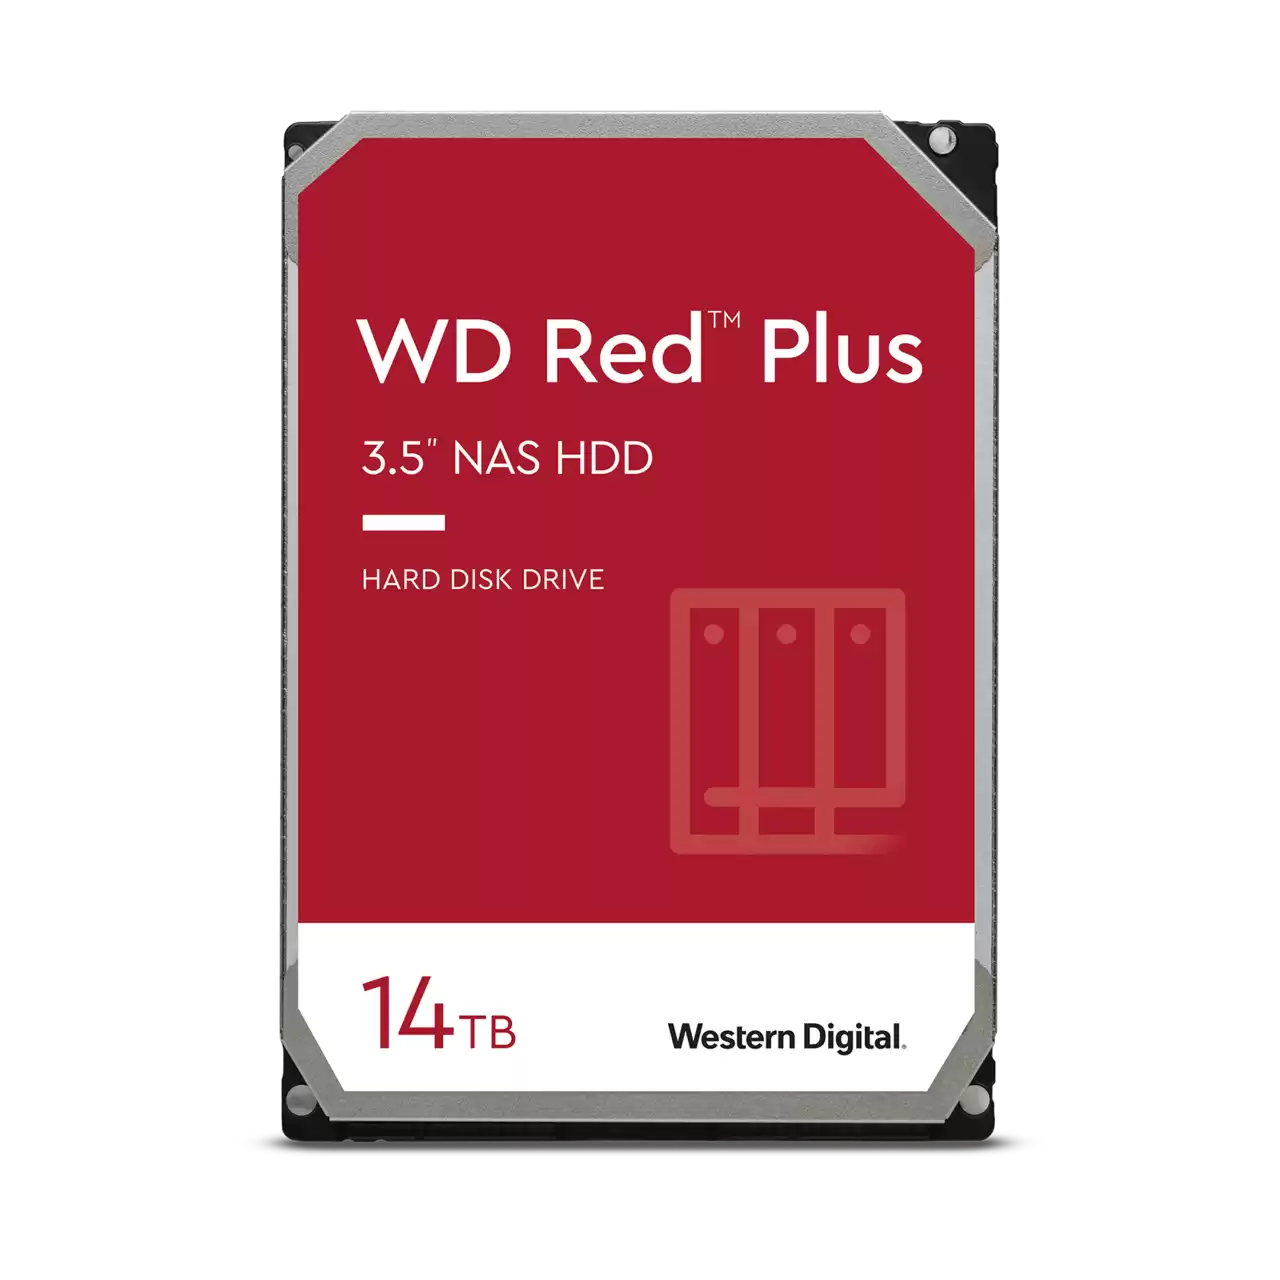 Western Digital WD Red Plus NAS Hard Drive 3.5 Inch